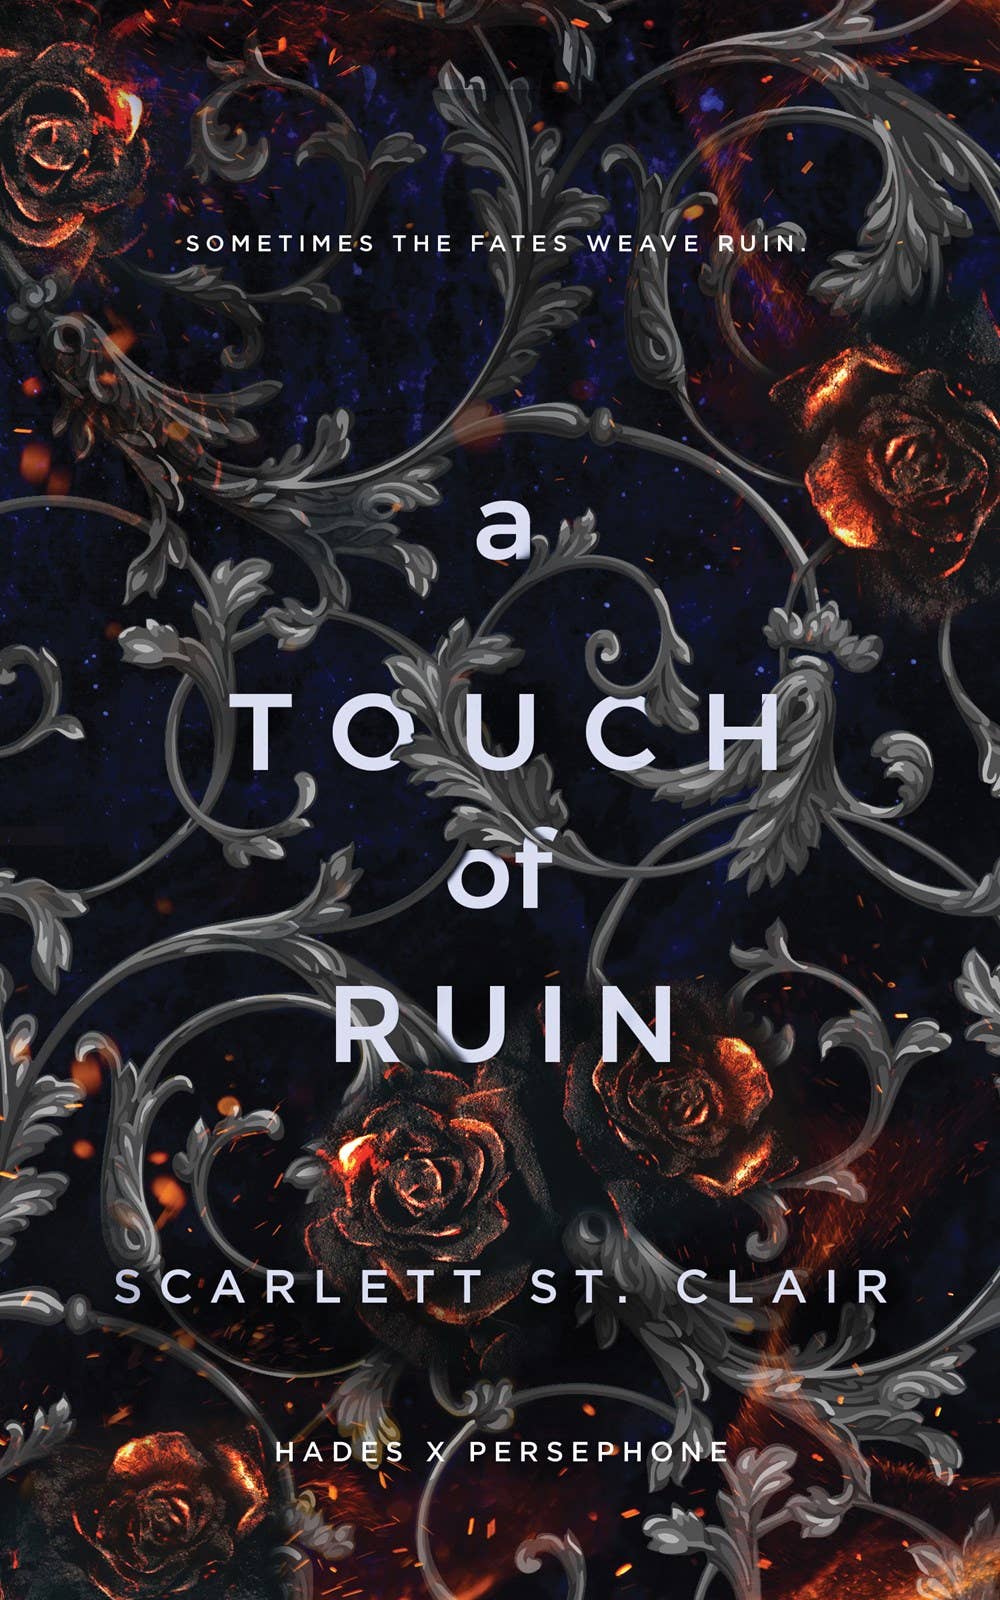 Fantasy Author Scarlett St. Clair Joins Bloom Books